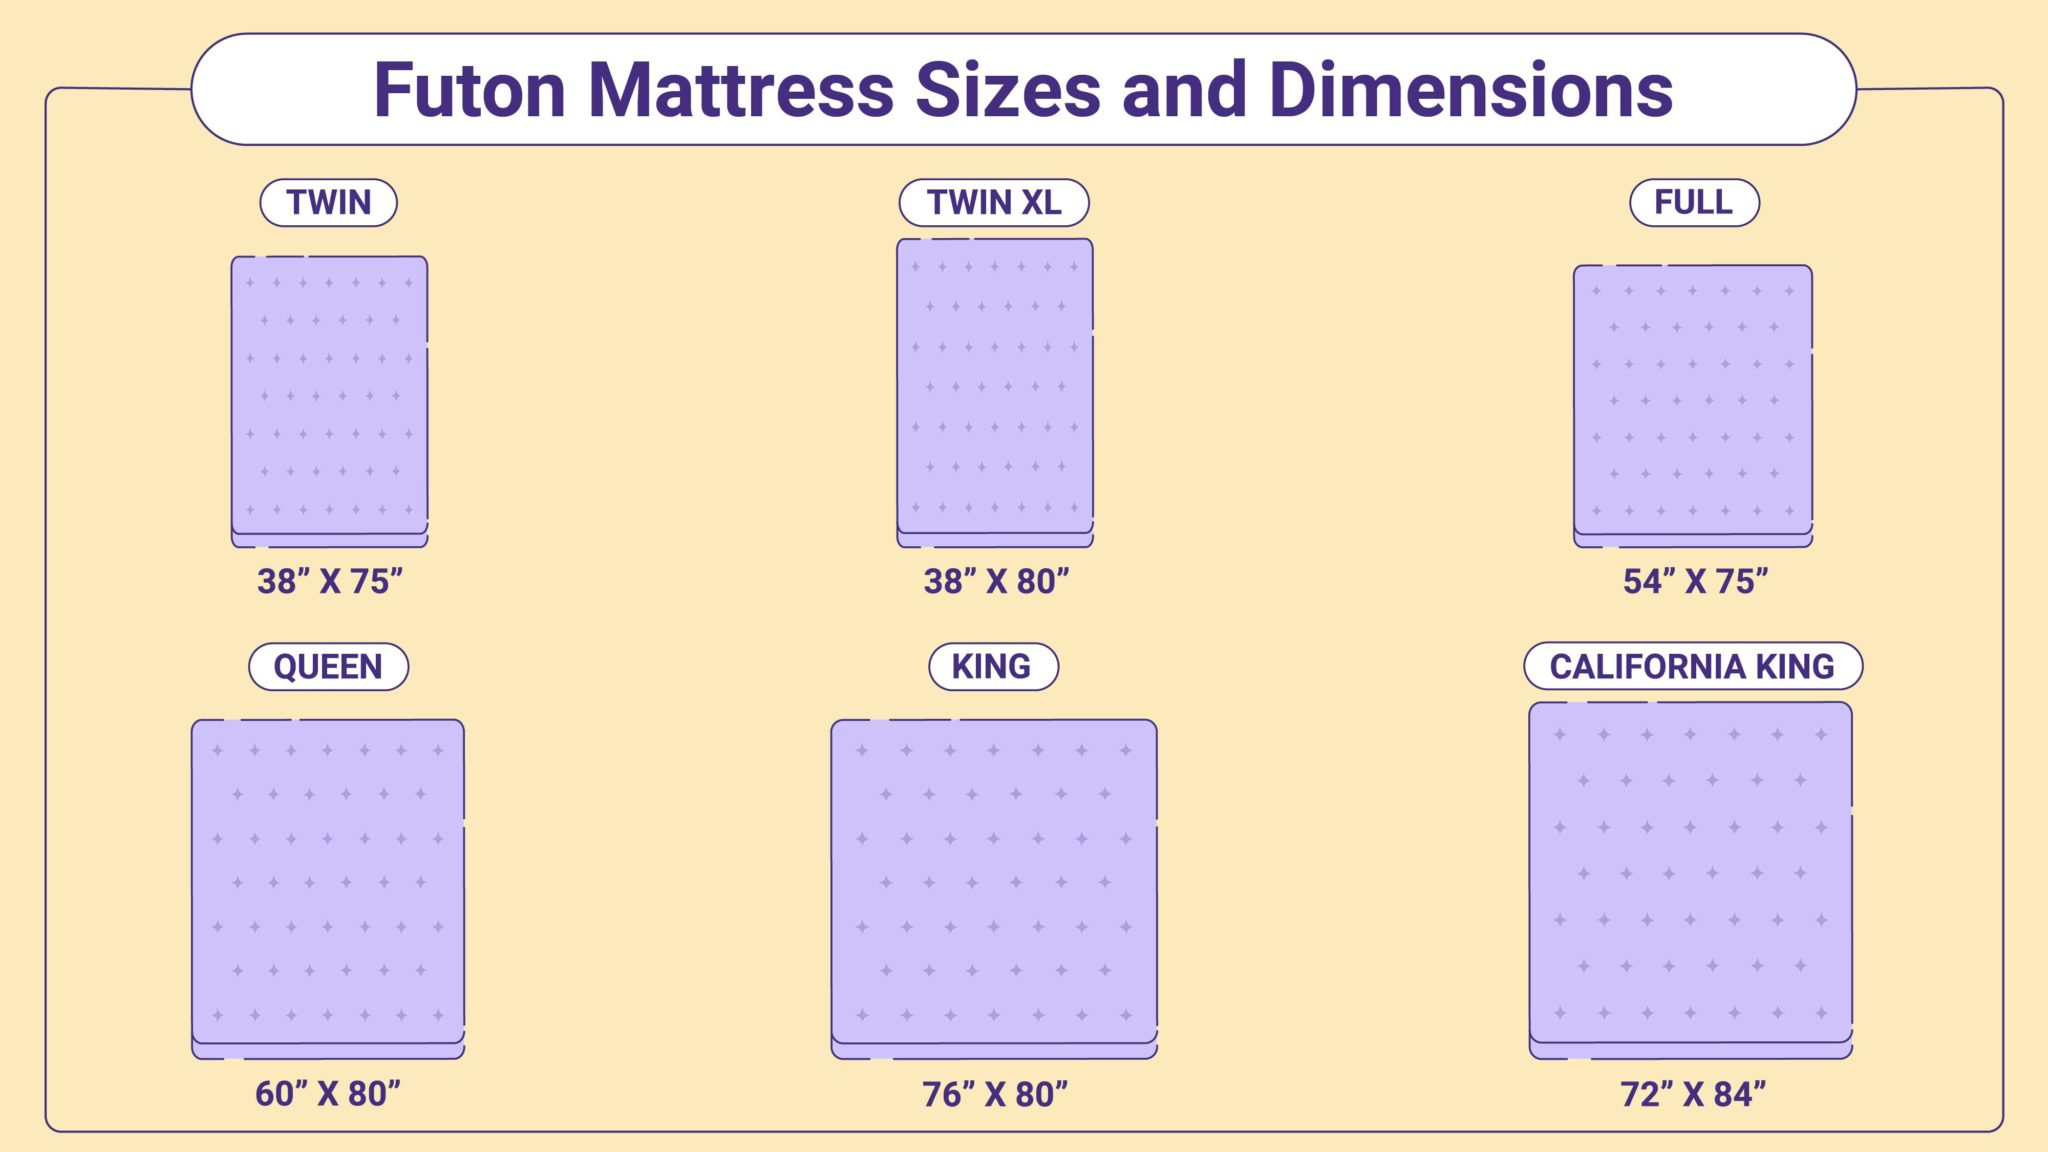 dimensoins for full size mattress